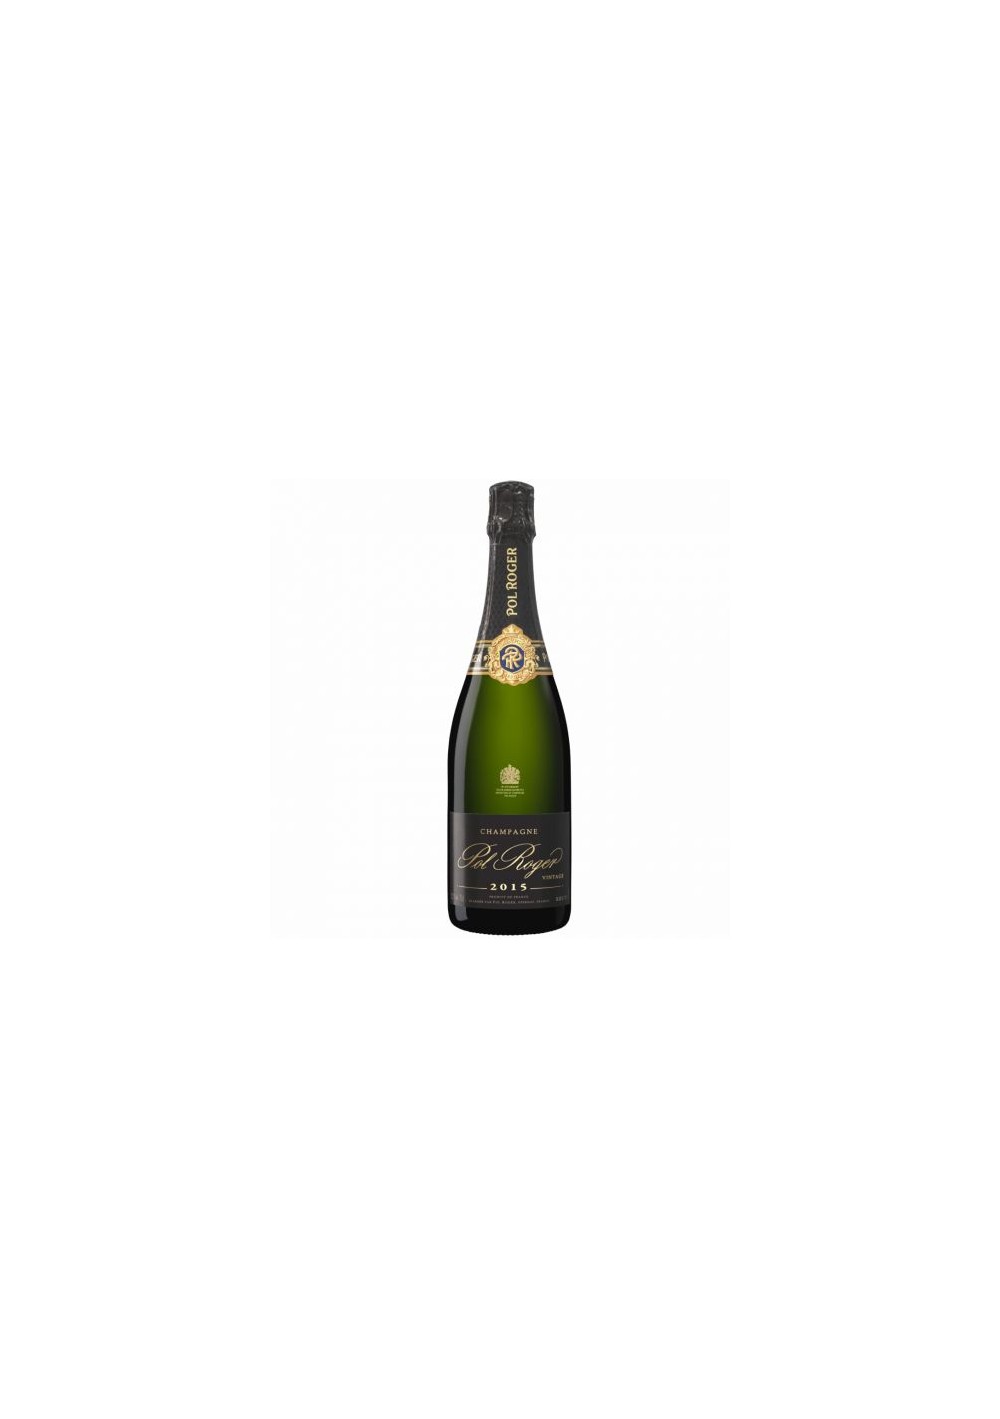 Champagne Pol Roger 2015